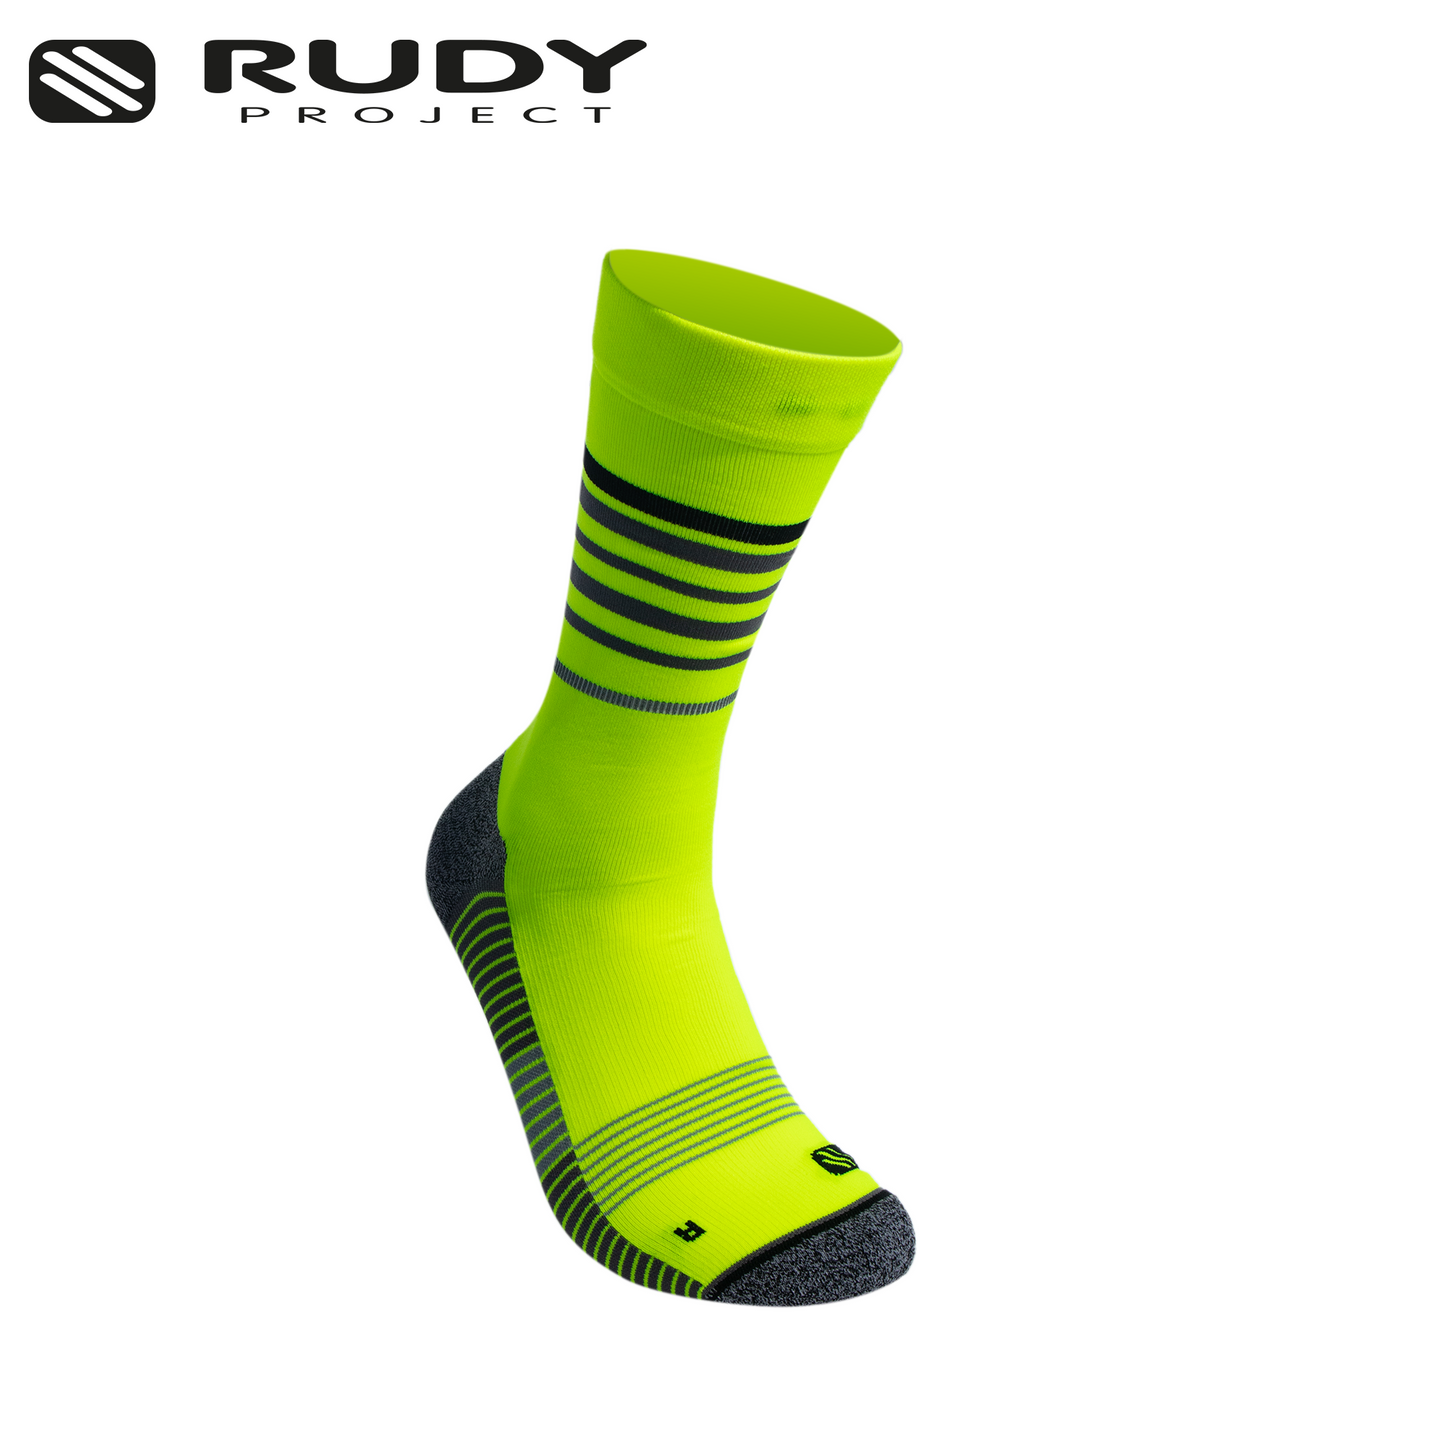 Rudy Project Medium Cut Socks in Yellow and Black